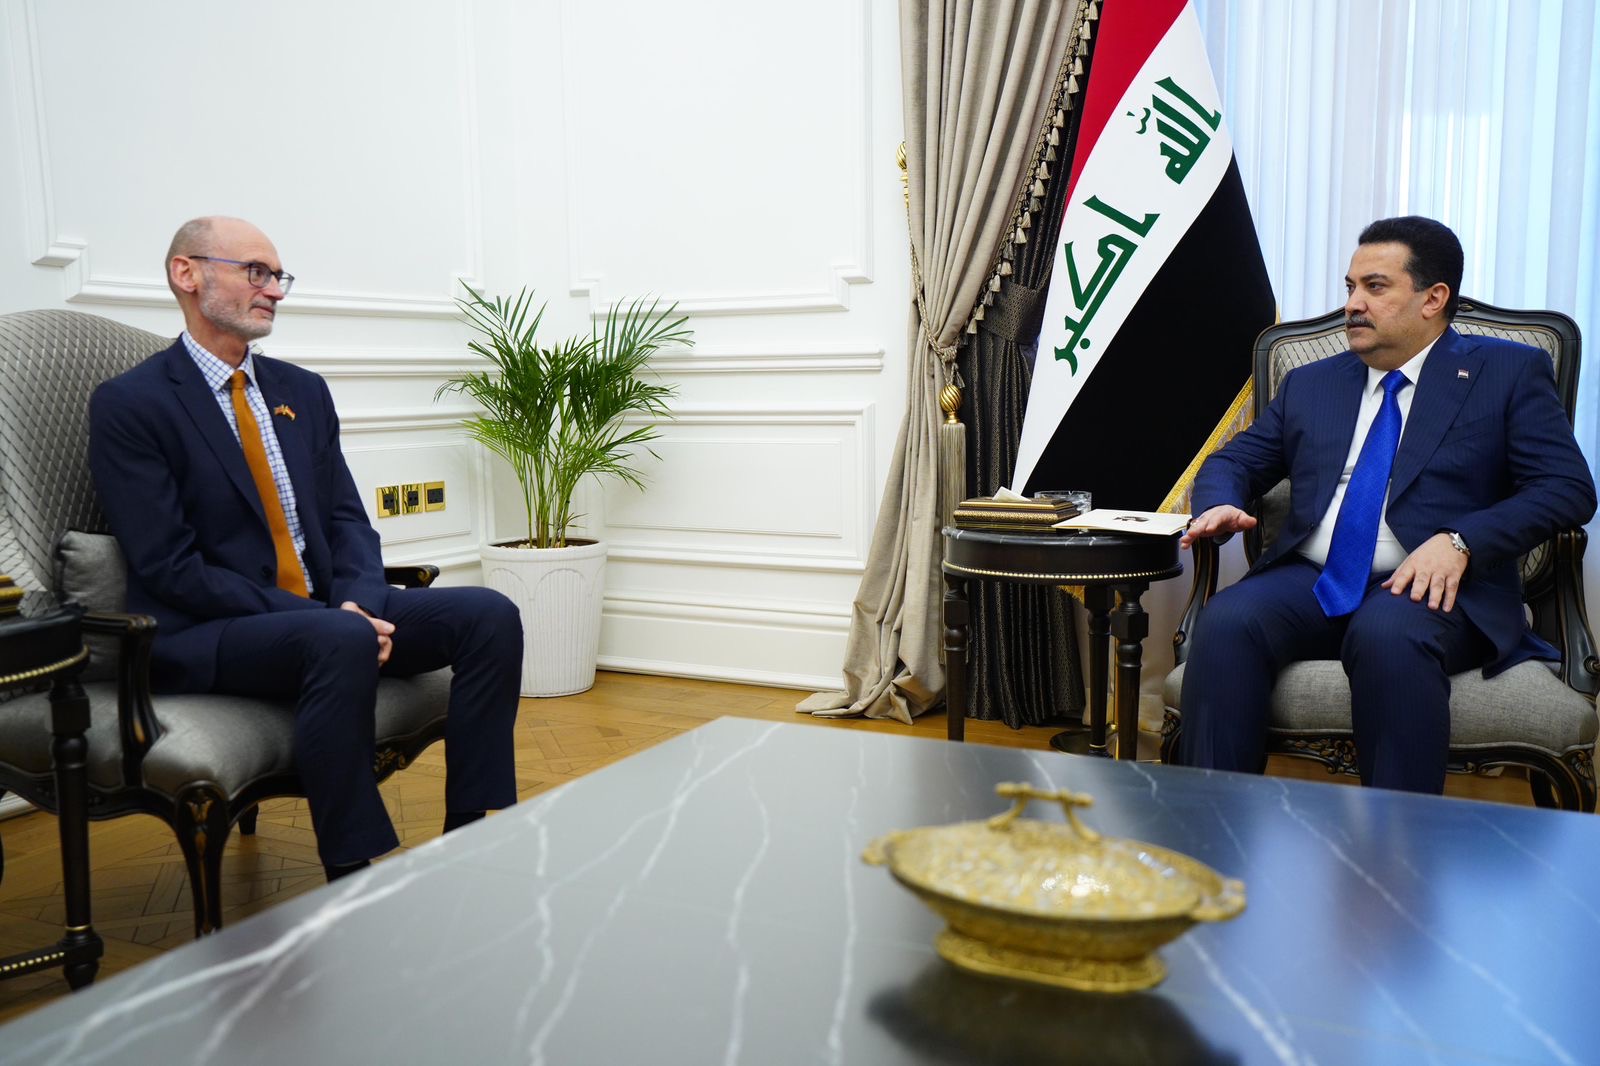 Iraqi PM discusses upcoming visit to UK with British ambassador